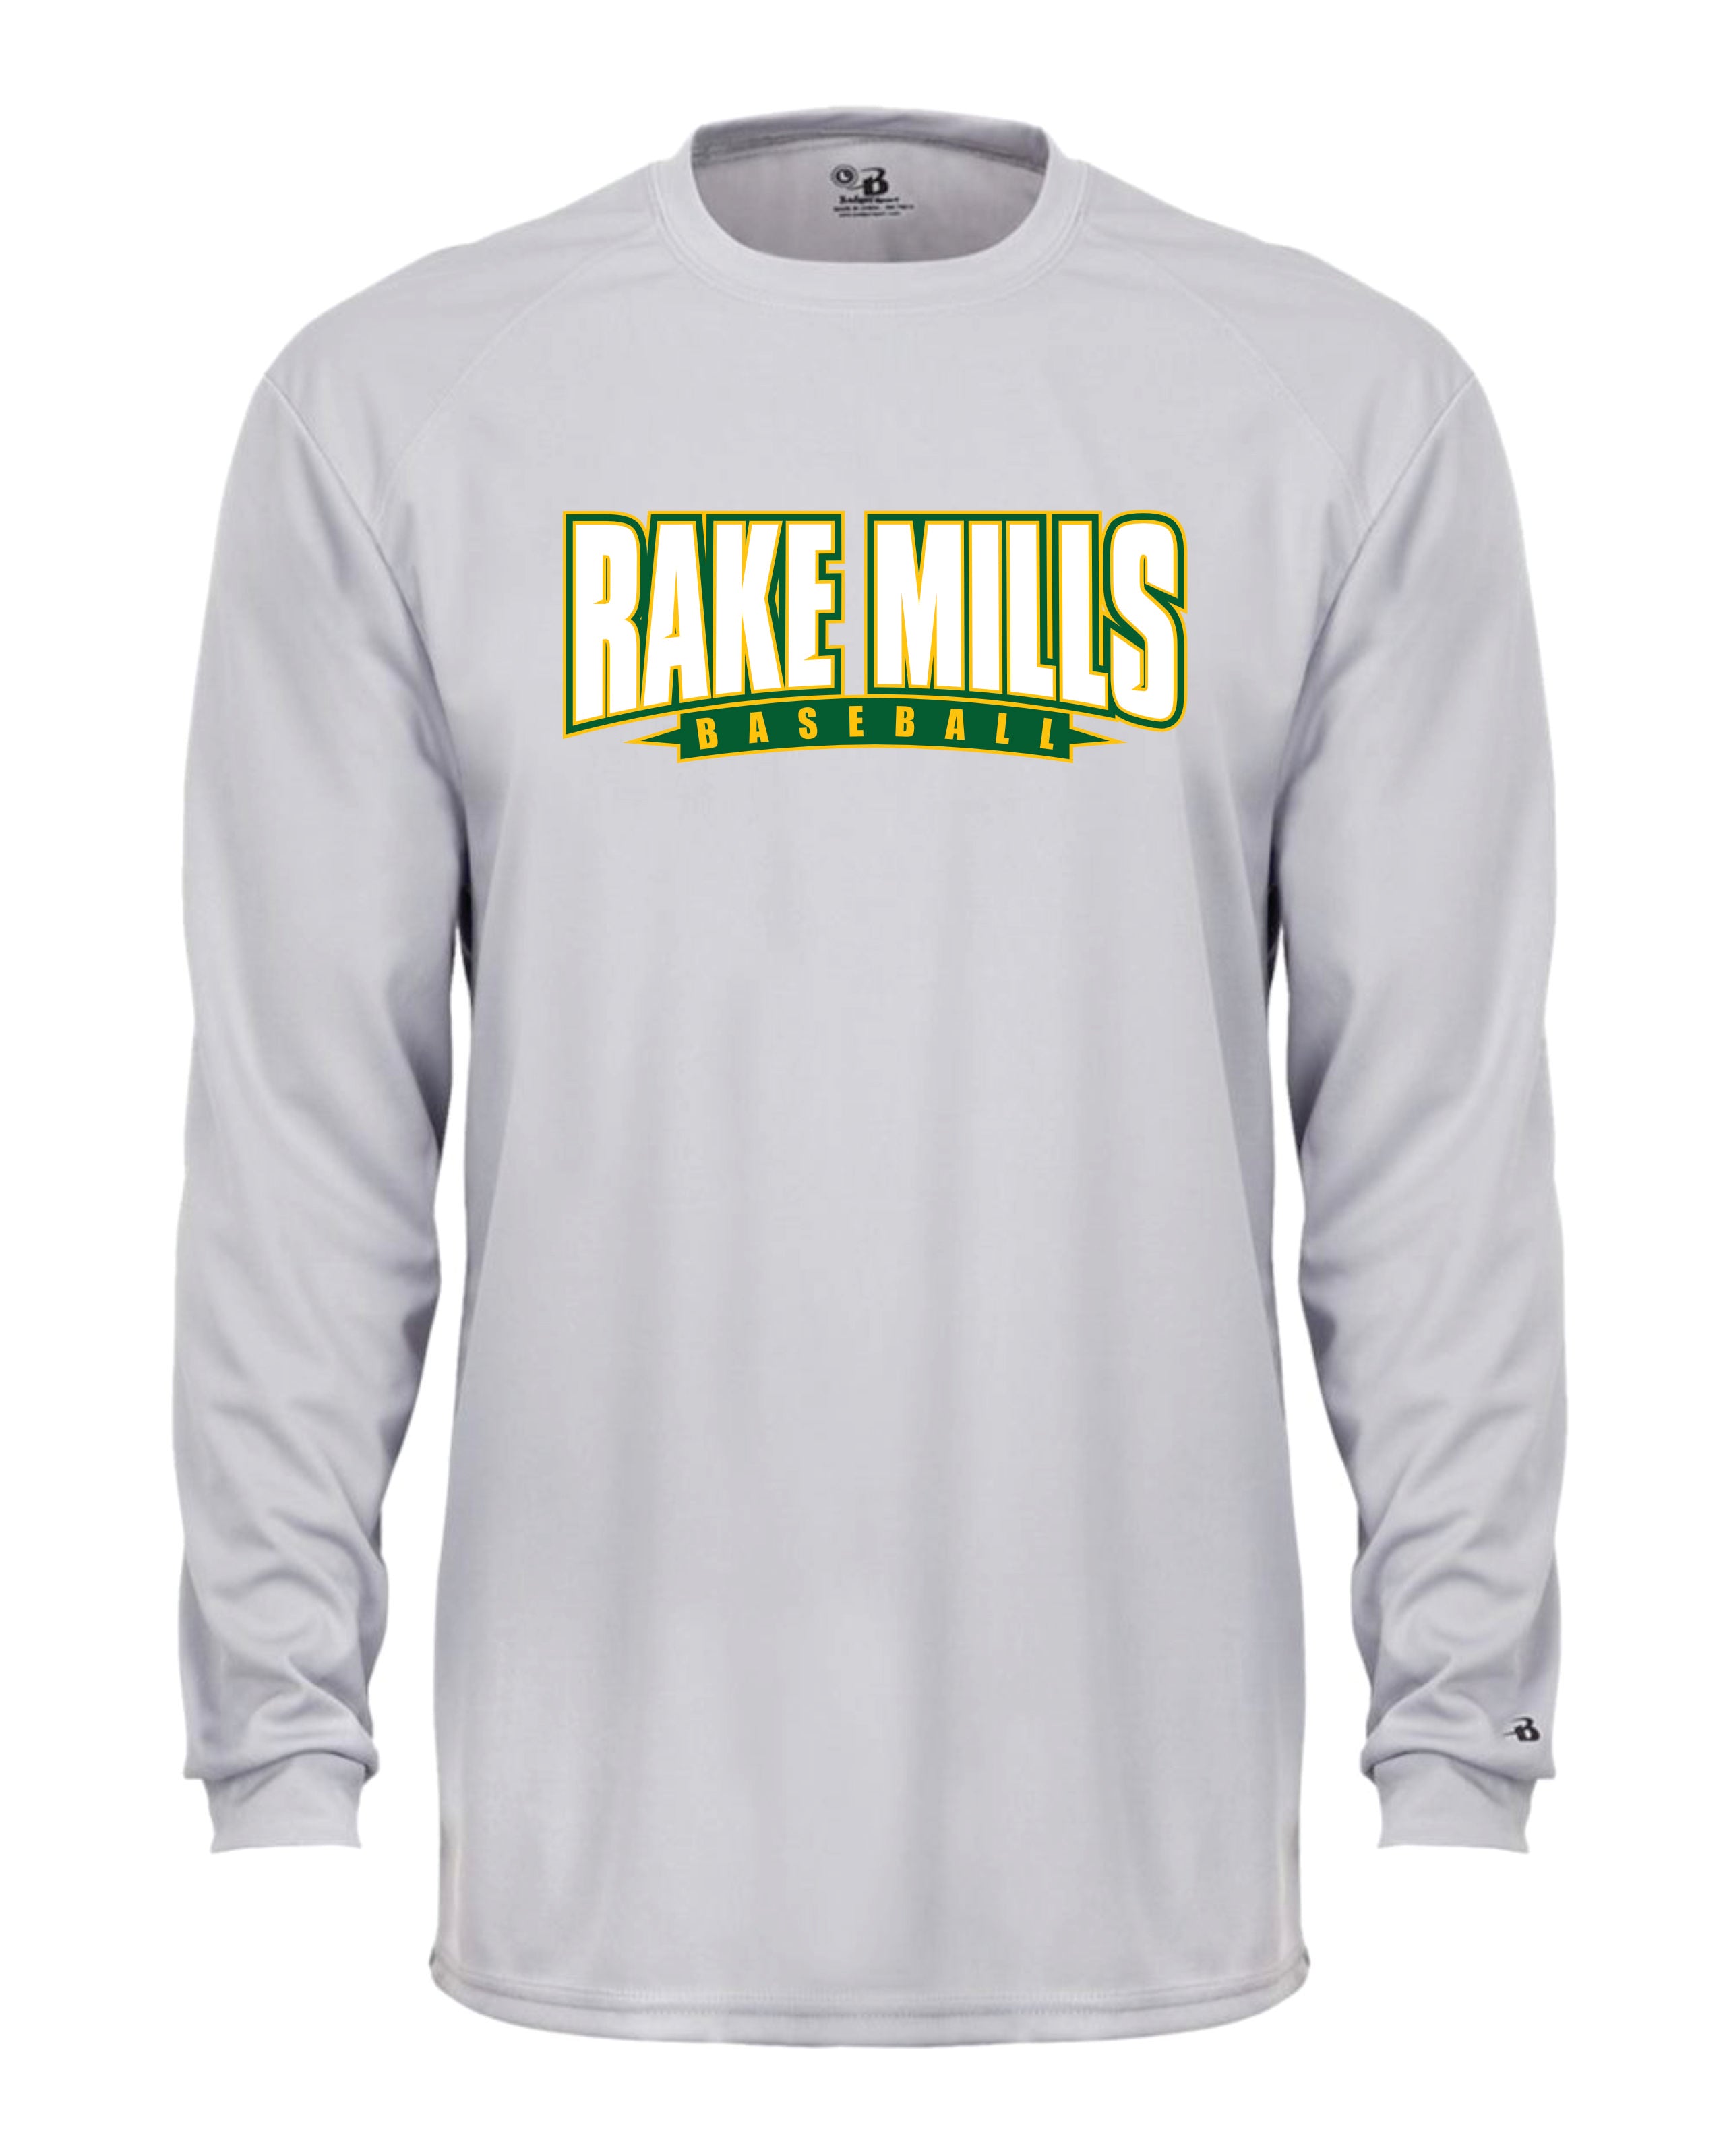 Great Mills Baseball Long Sleeve  Badger Dri Fit Shirt - RAKE MILLS